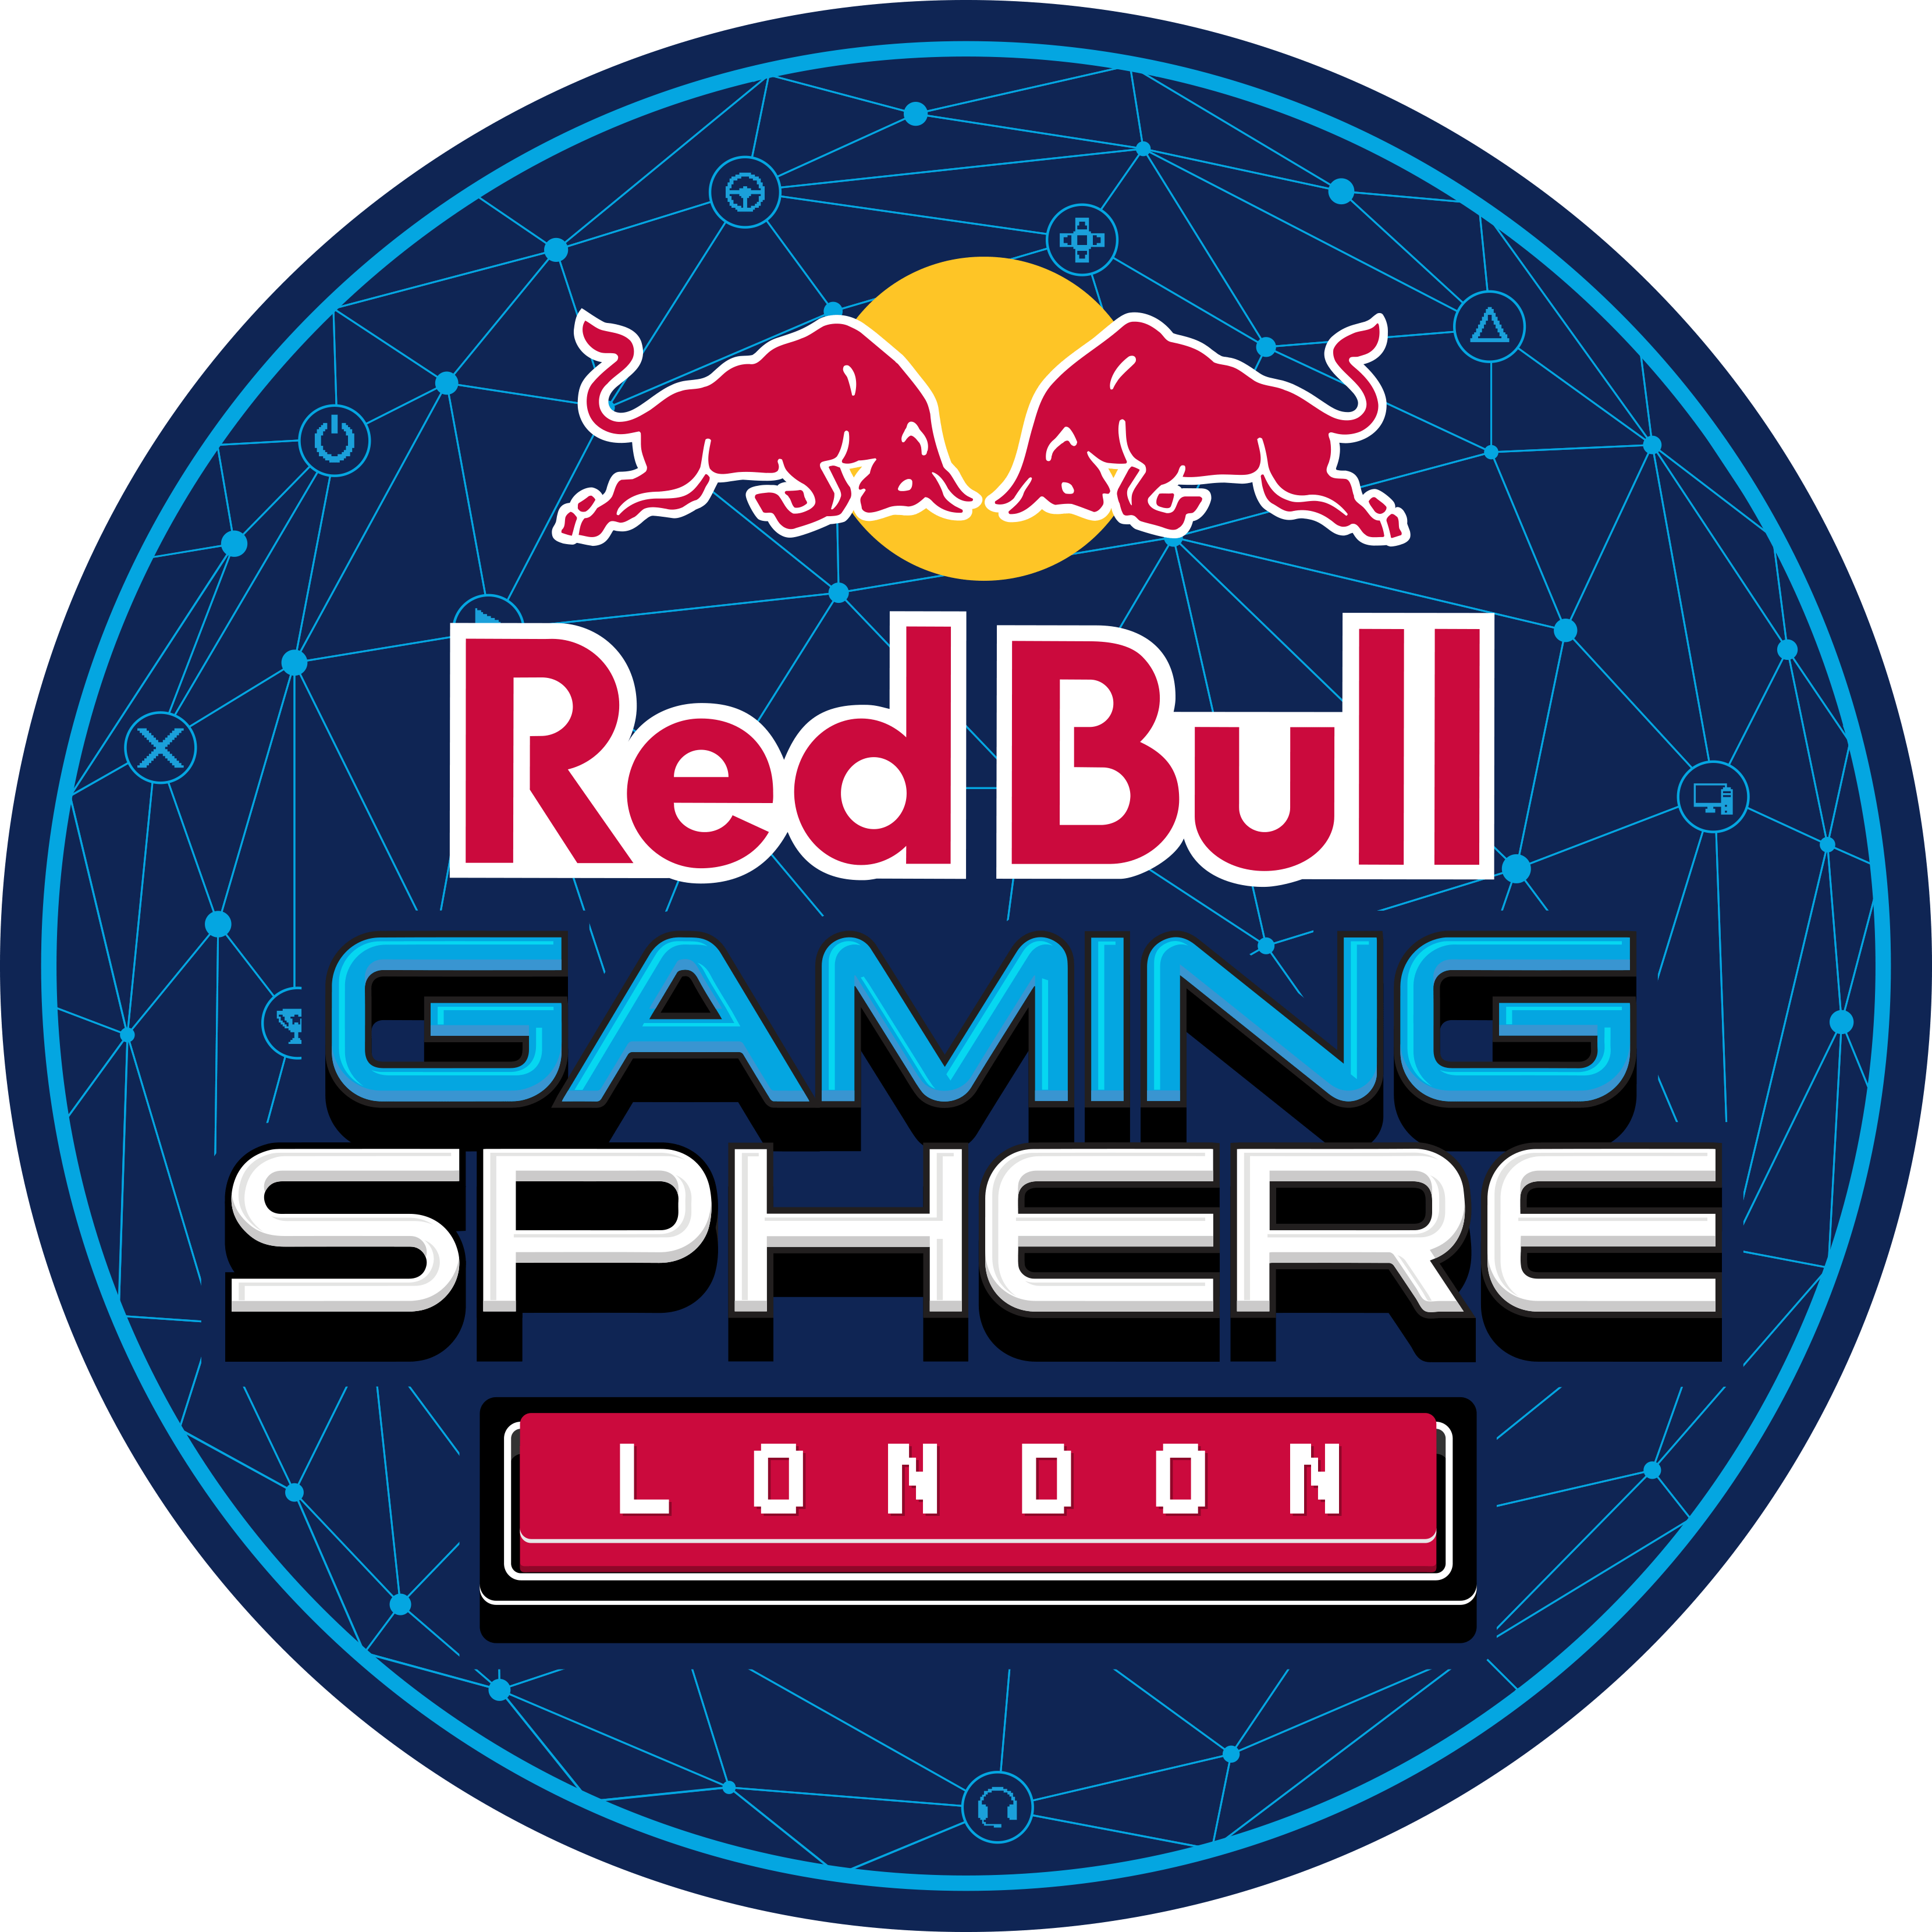 Red bull Gaming. Red bull Gaming Sphere London. Bull games логотип. Red bull Gaming logo. Wars cup